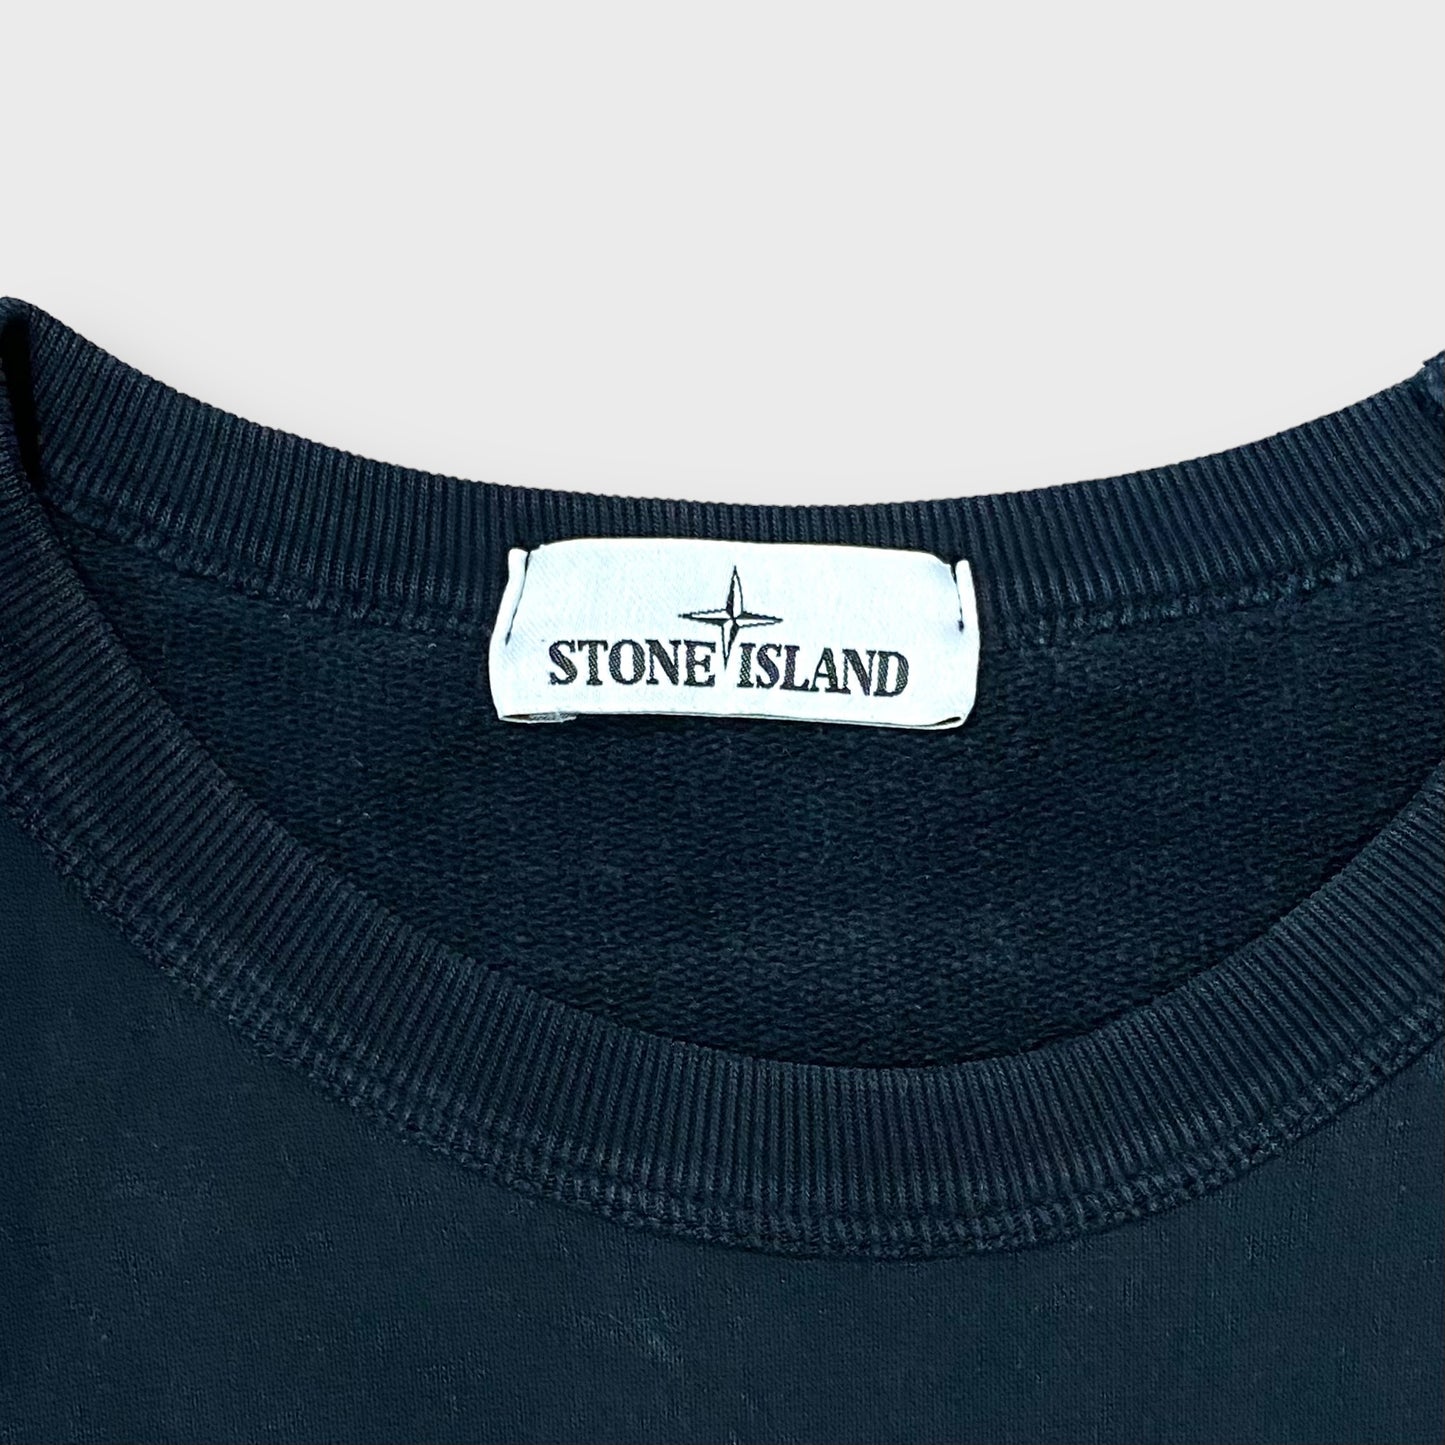 00's "STONE ISLAND" Sweat shirt